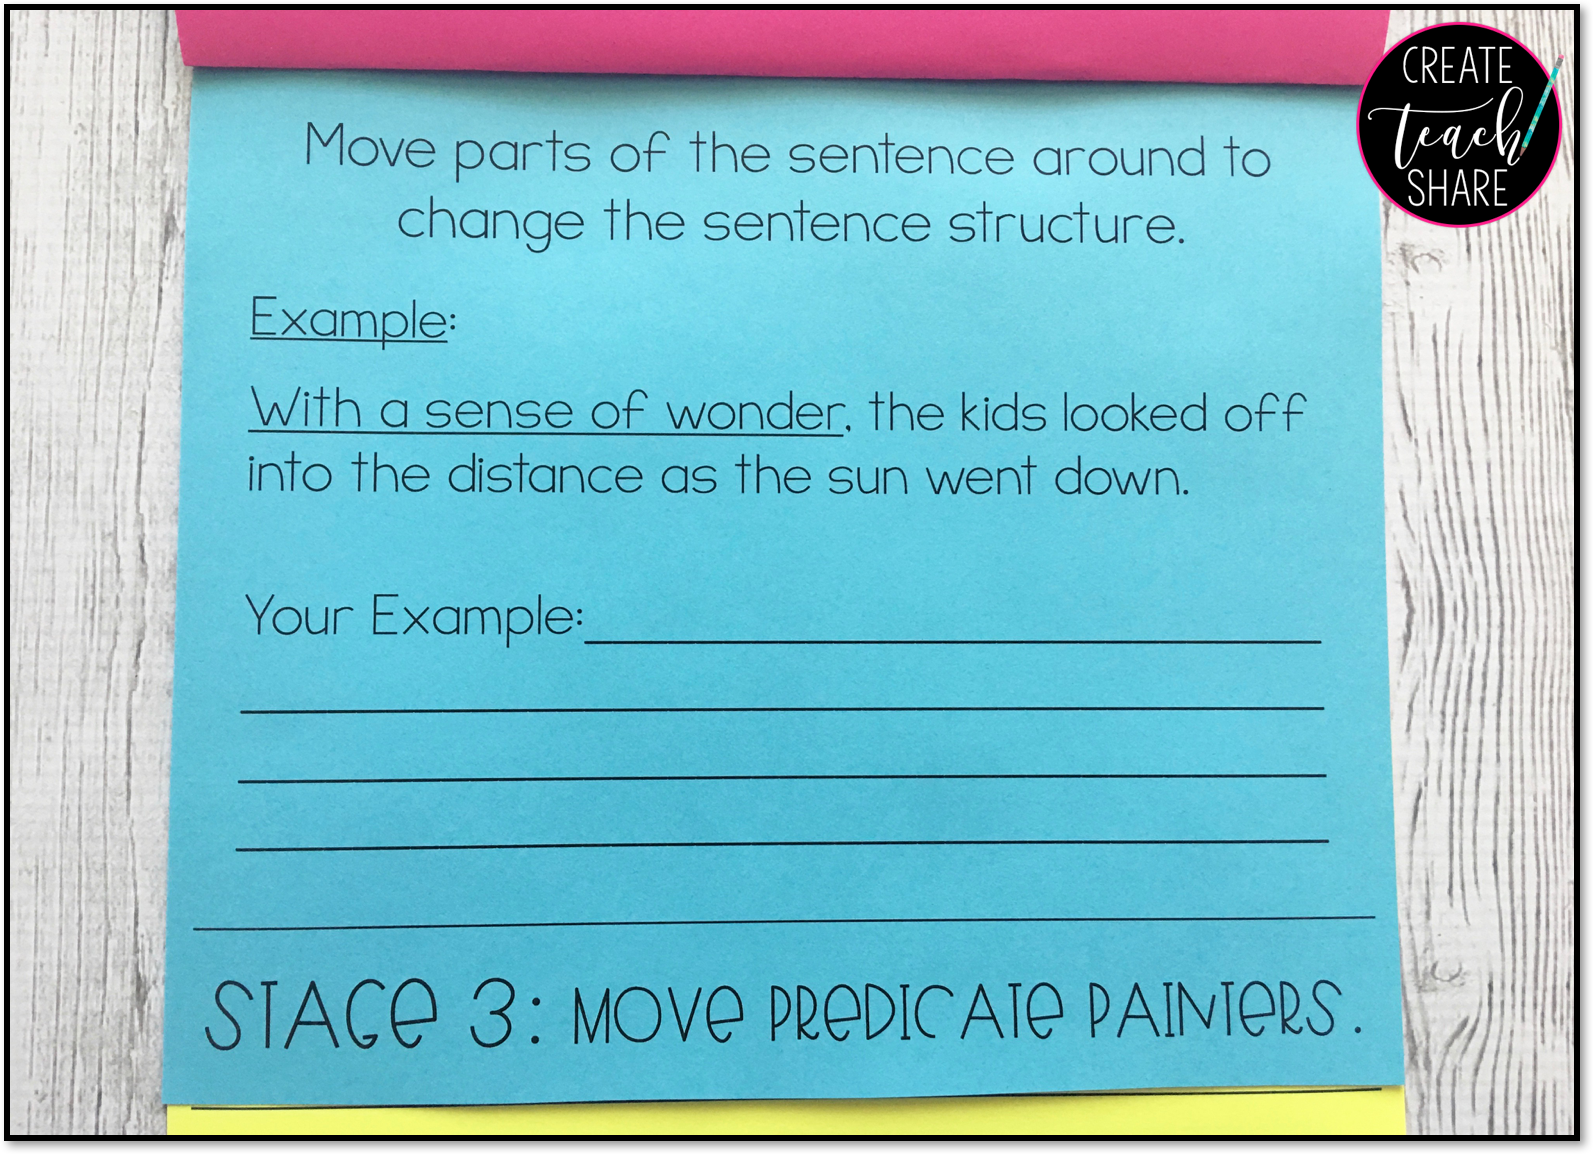 upper-elementary-snapshots-improving-student-writing-using-masterpiece-sentences